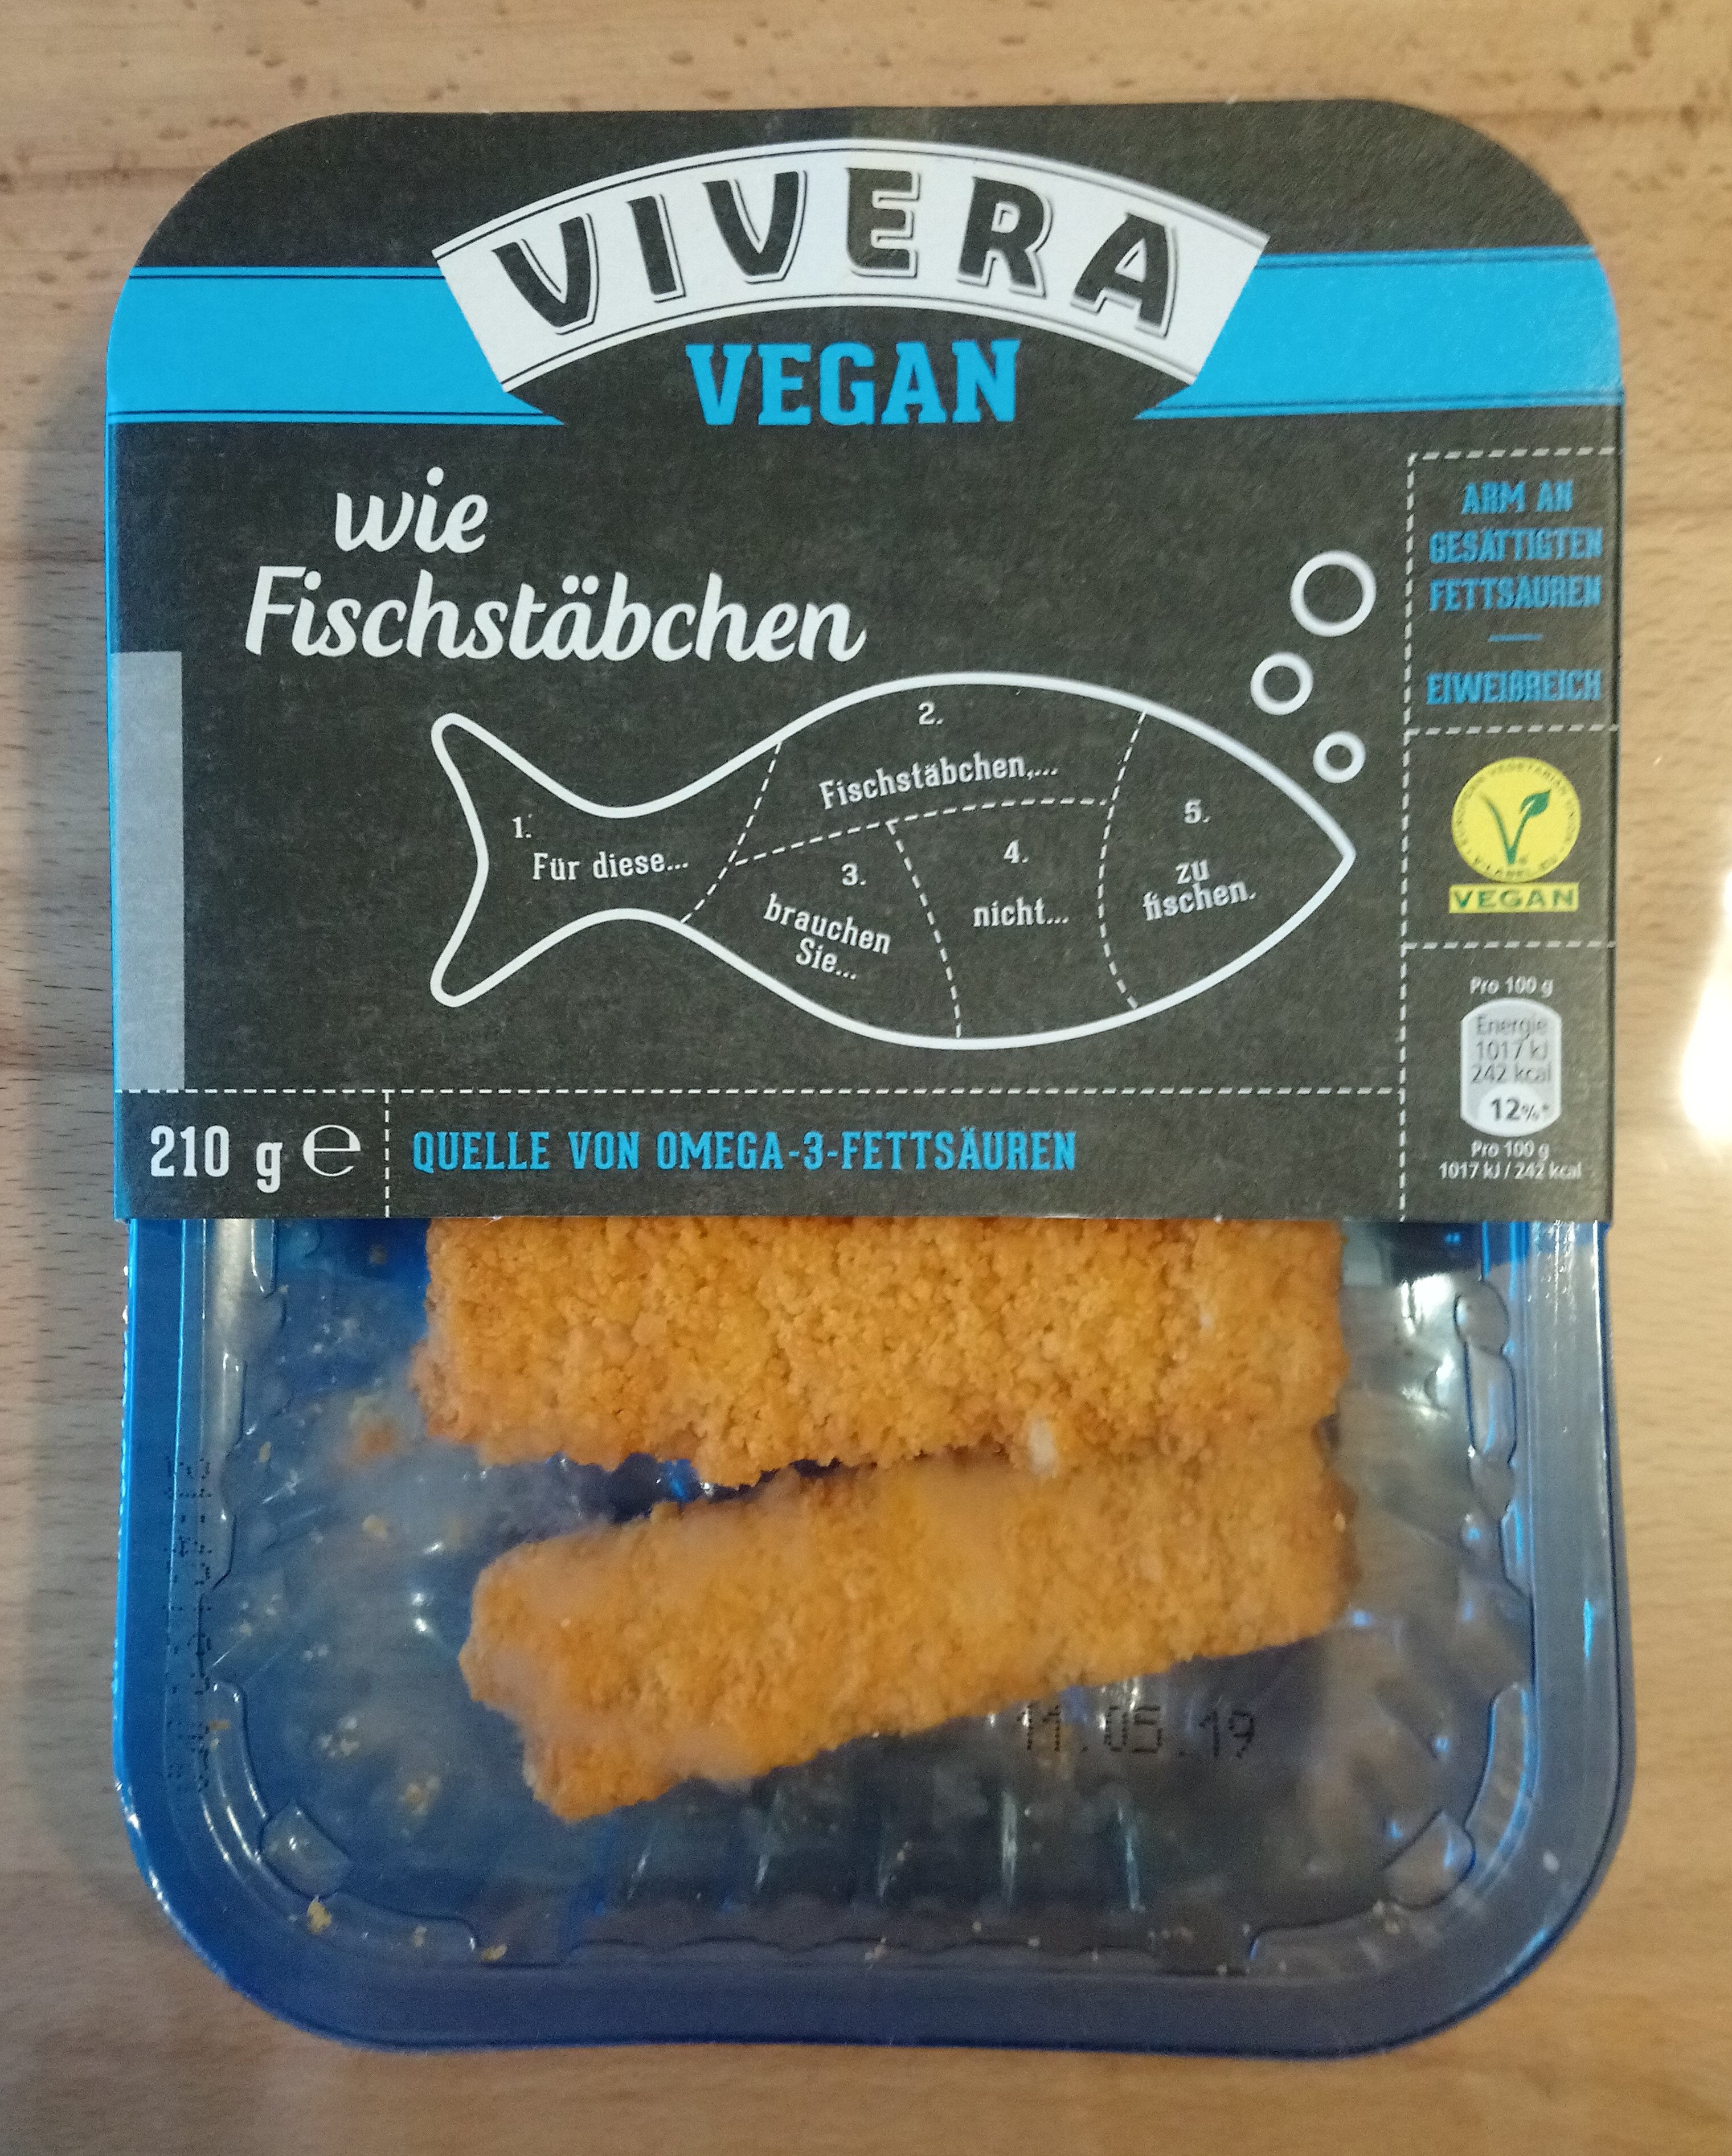 Stick de poissons vegan - Produkt